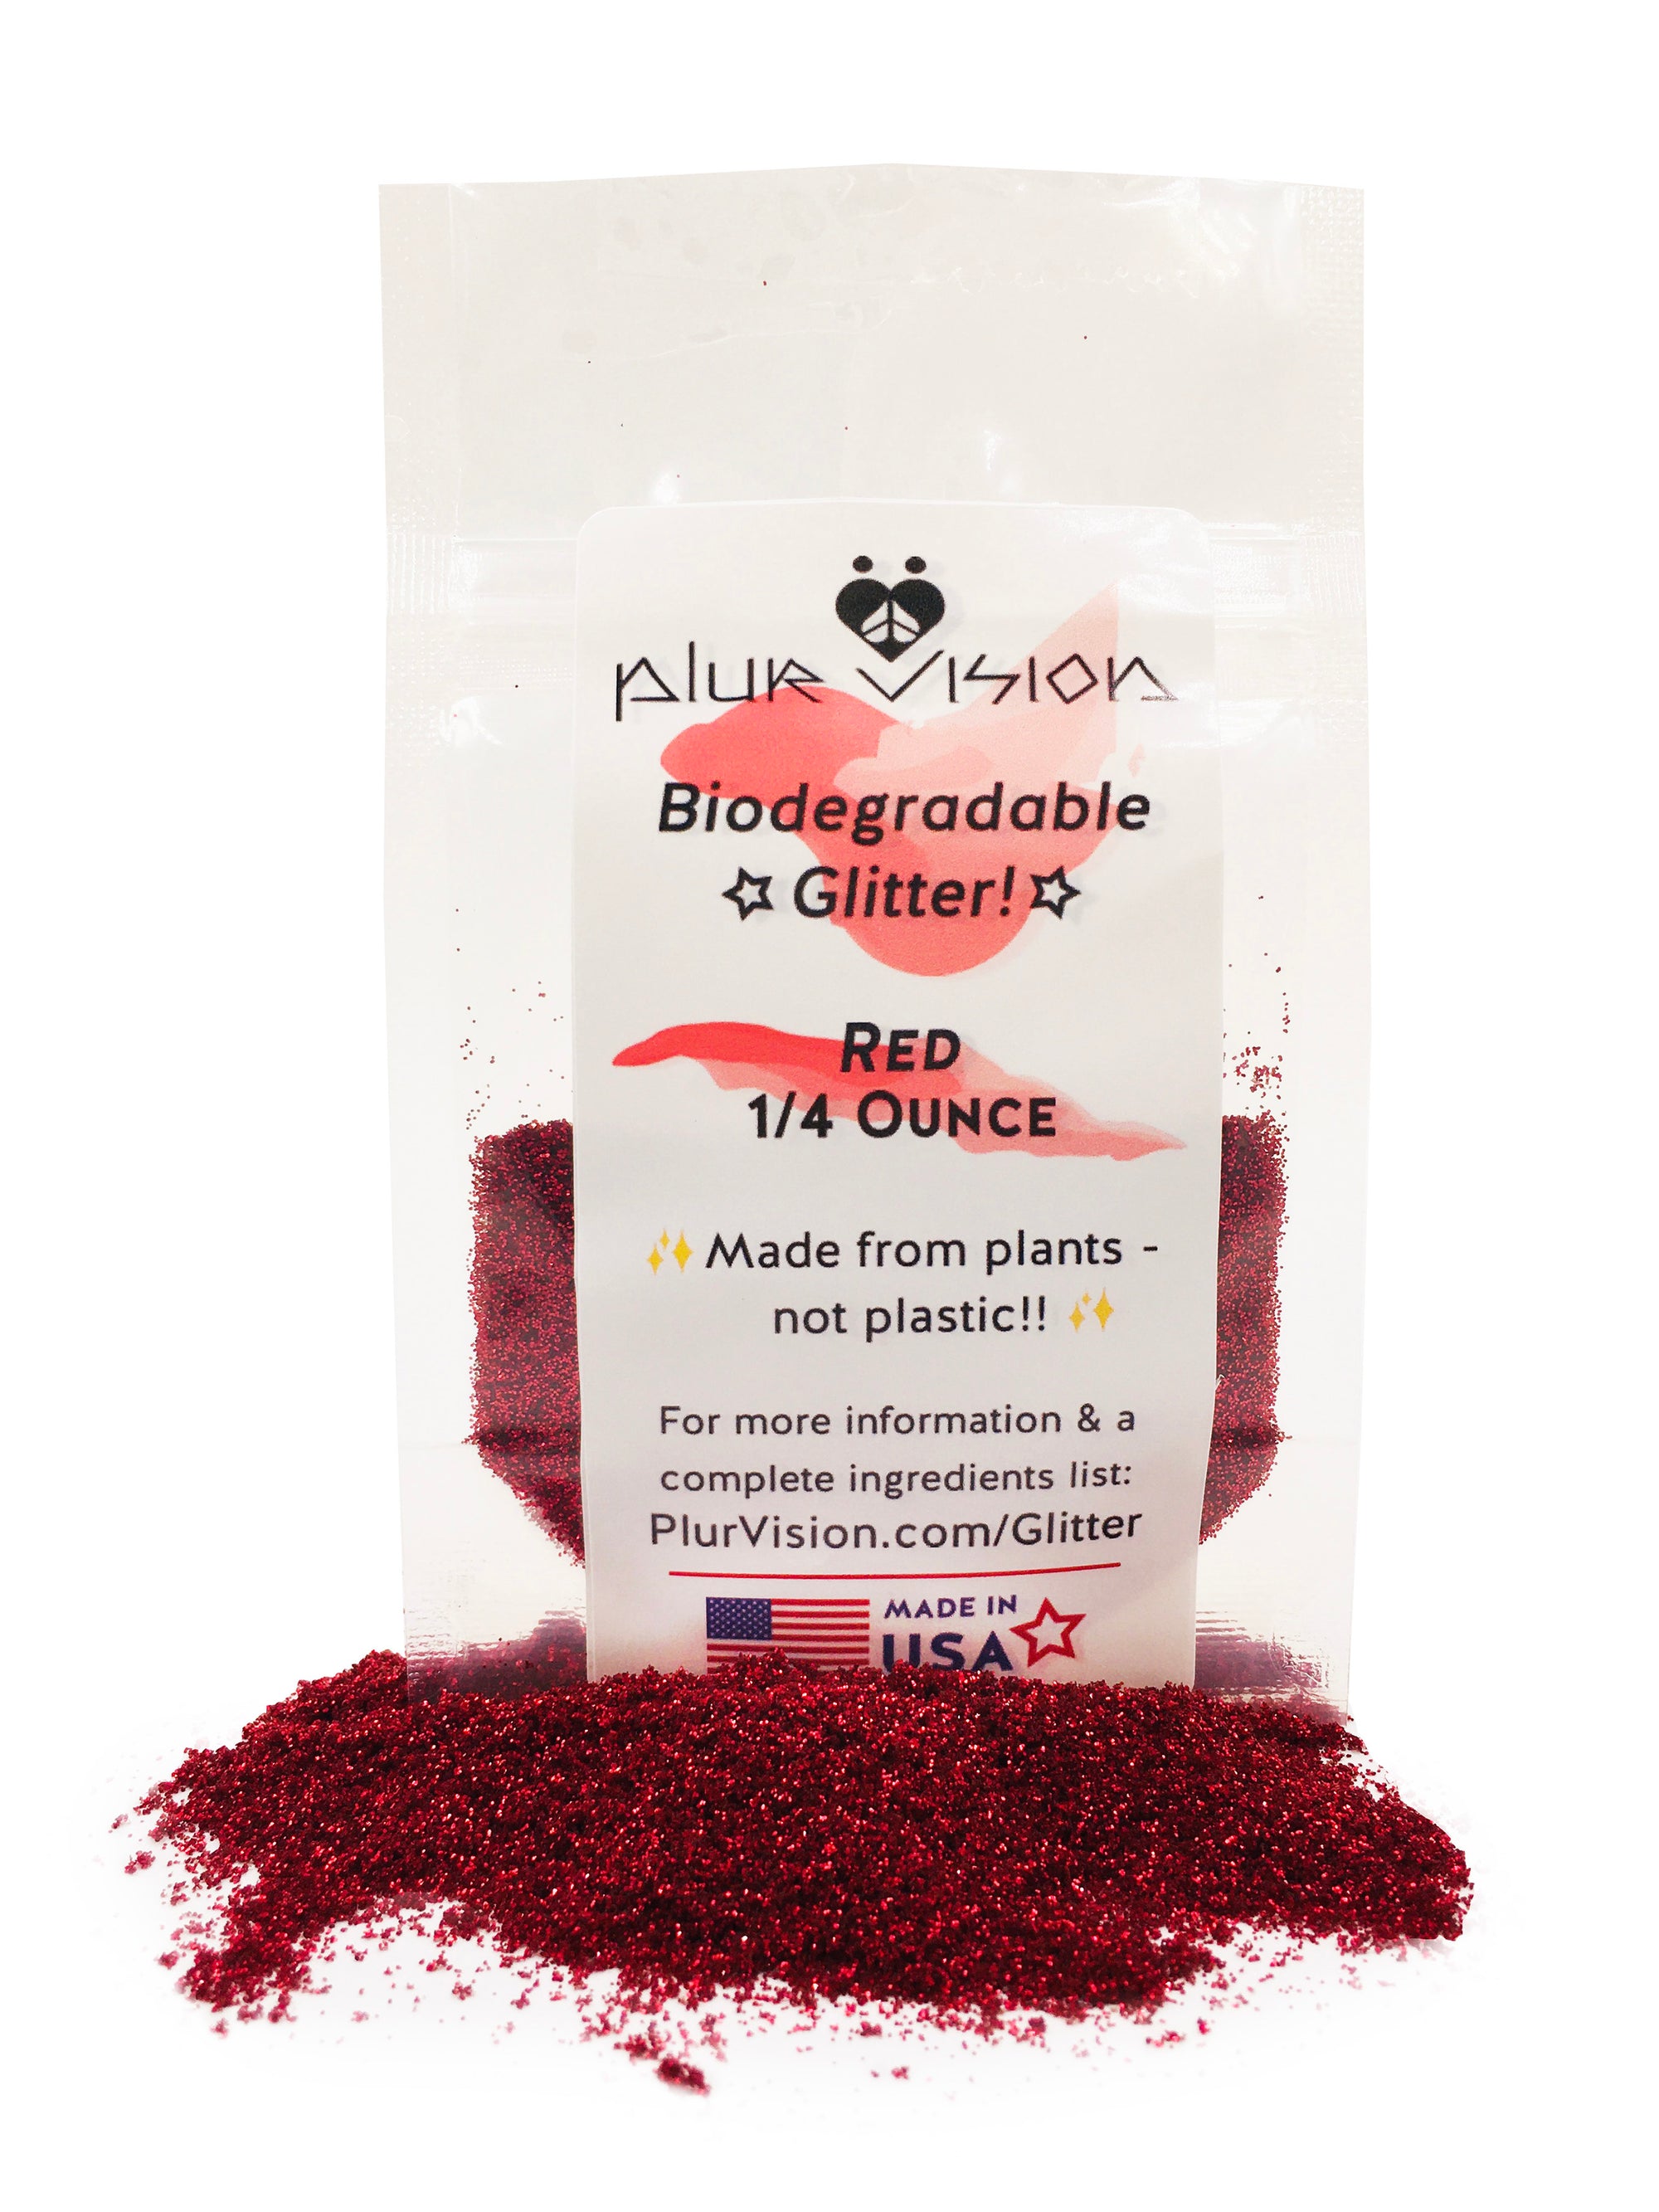 ✨ Red Biodegradable Glitter! ✨